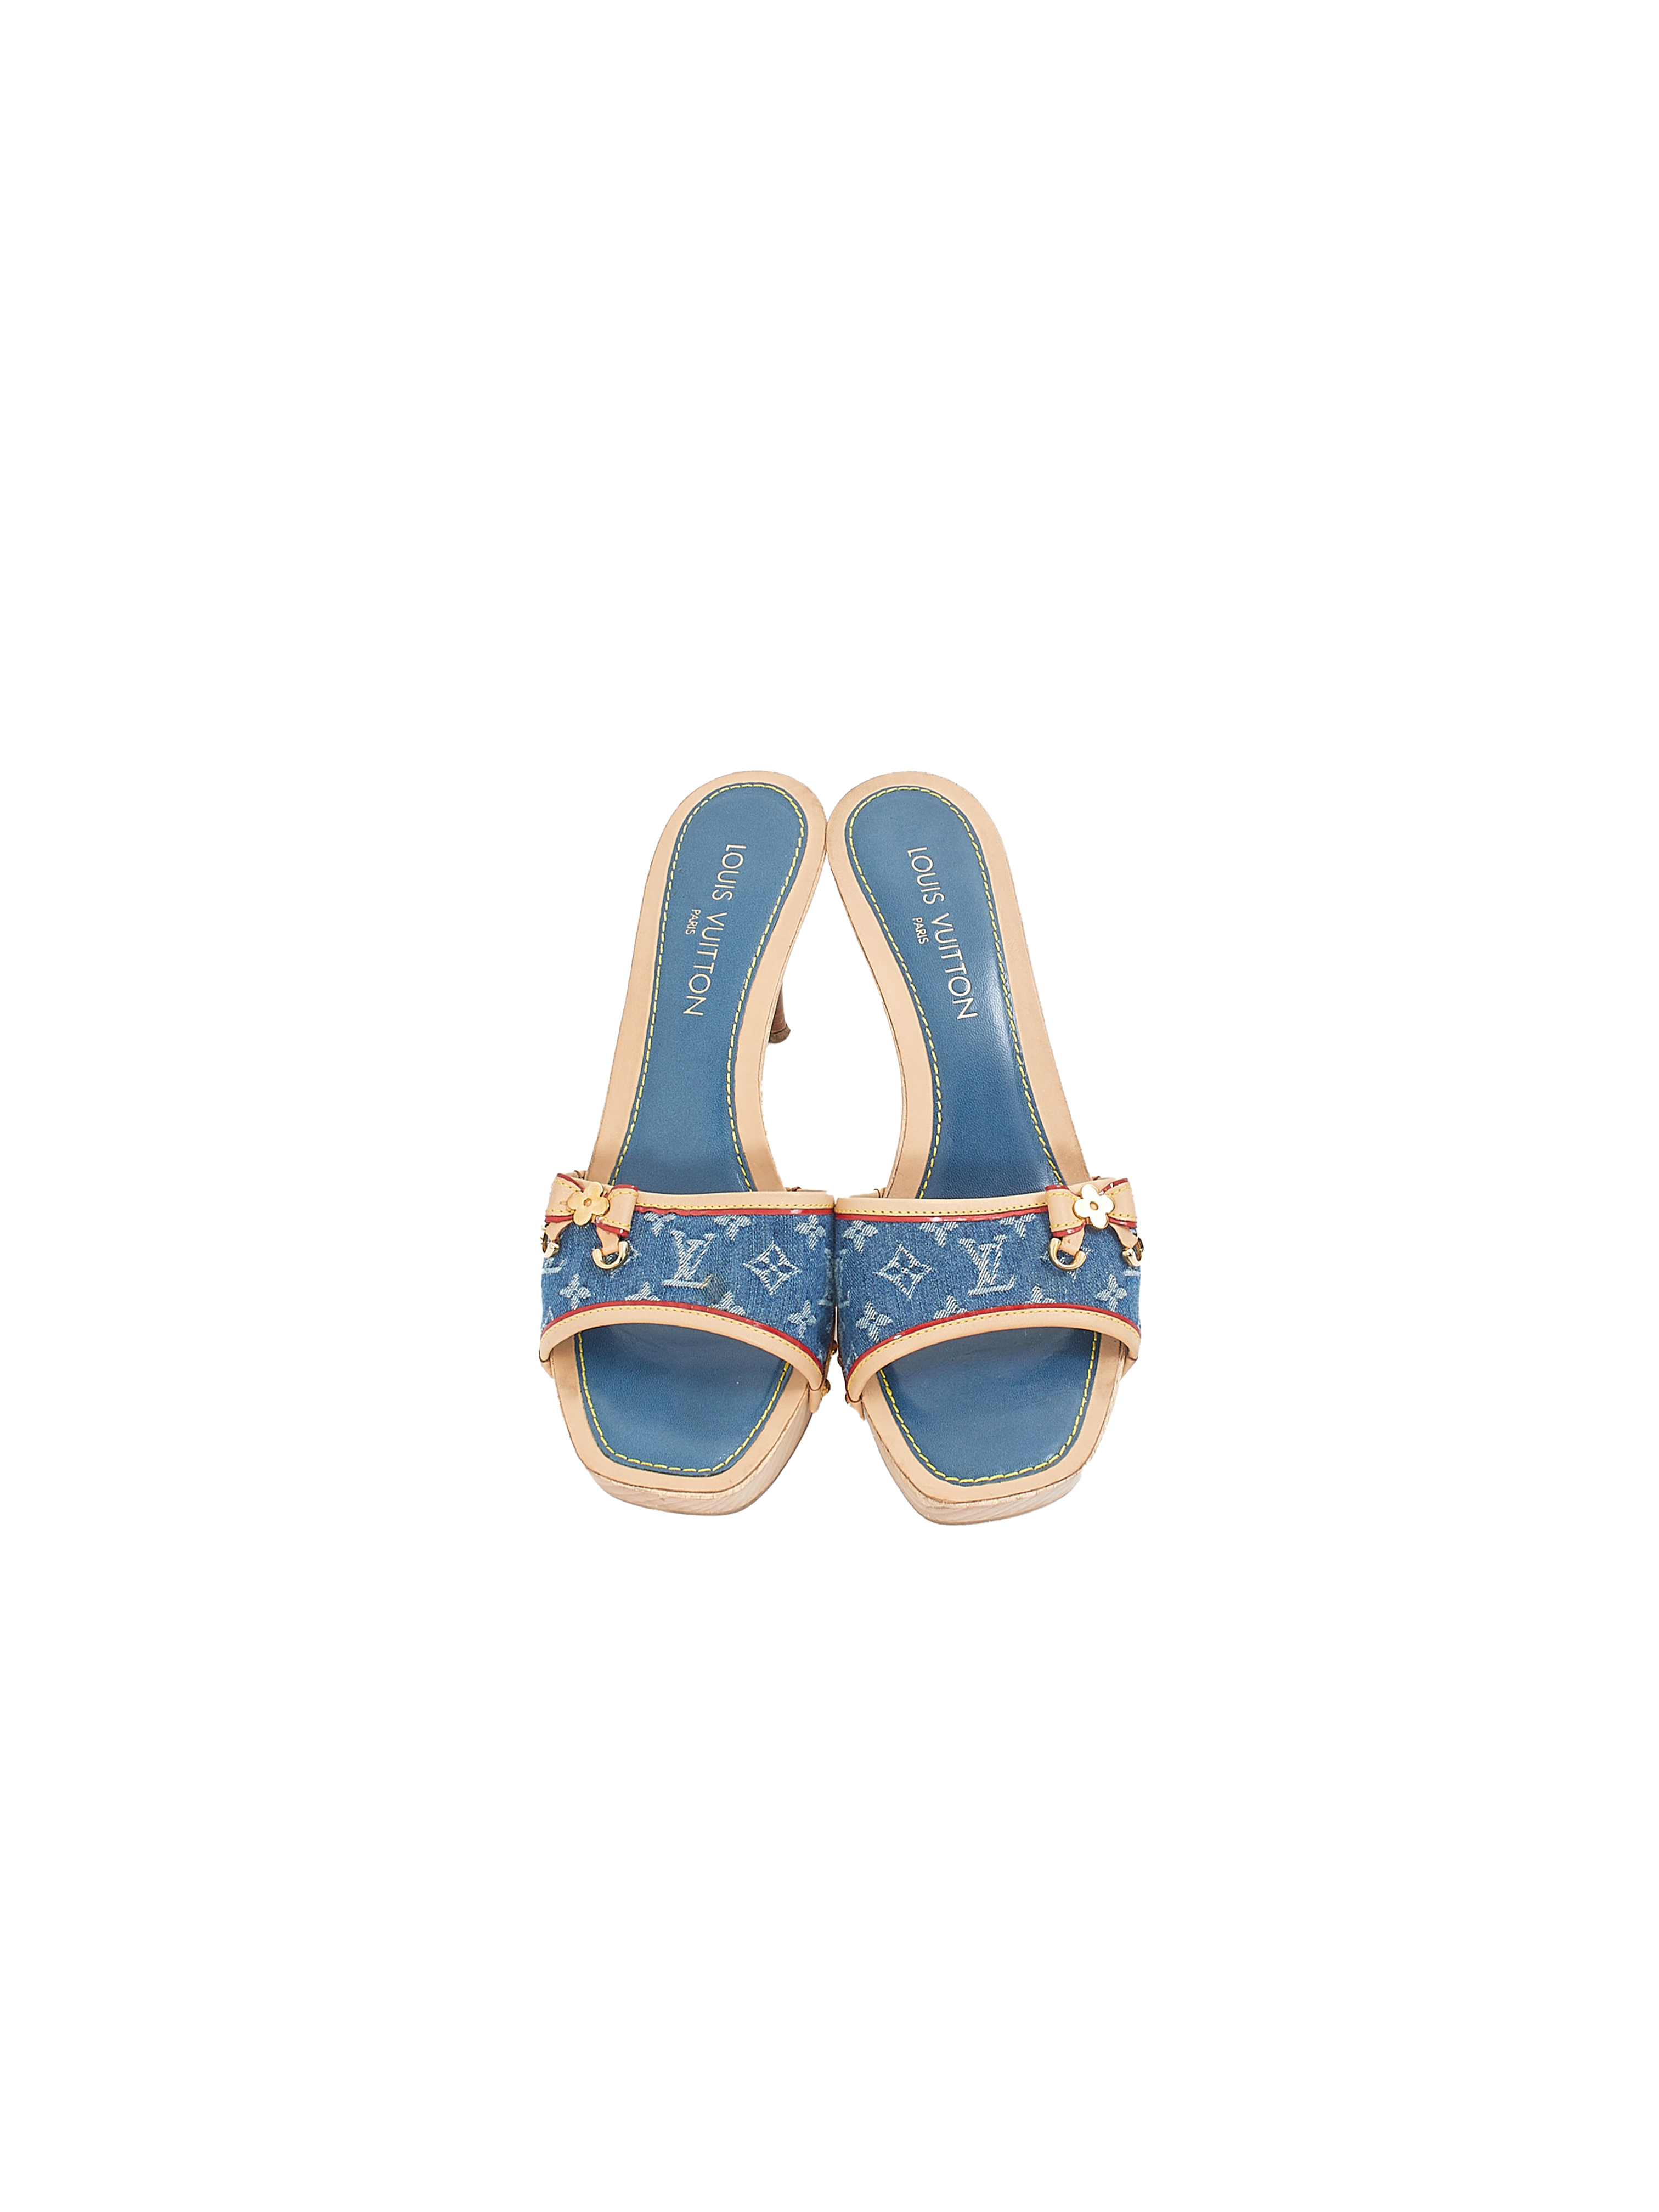 Louis Vuitton Denim Monogram Bow Ballet Flats - 40.5 / 10